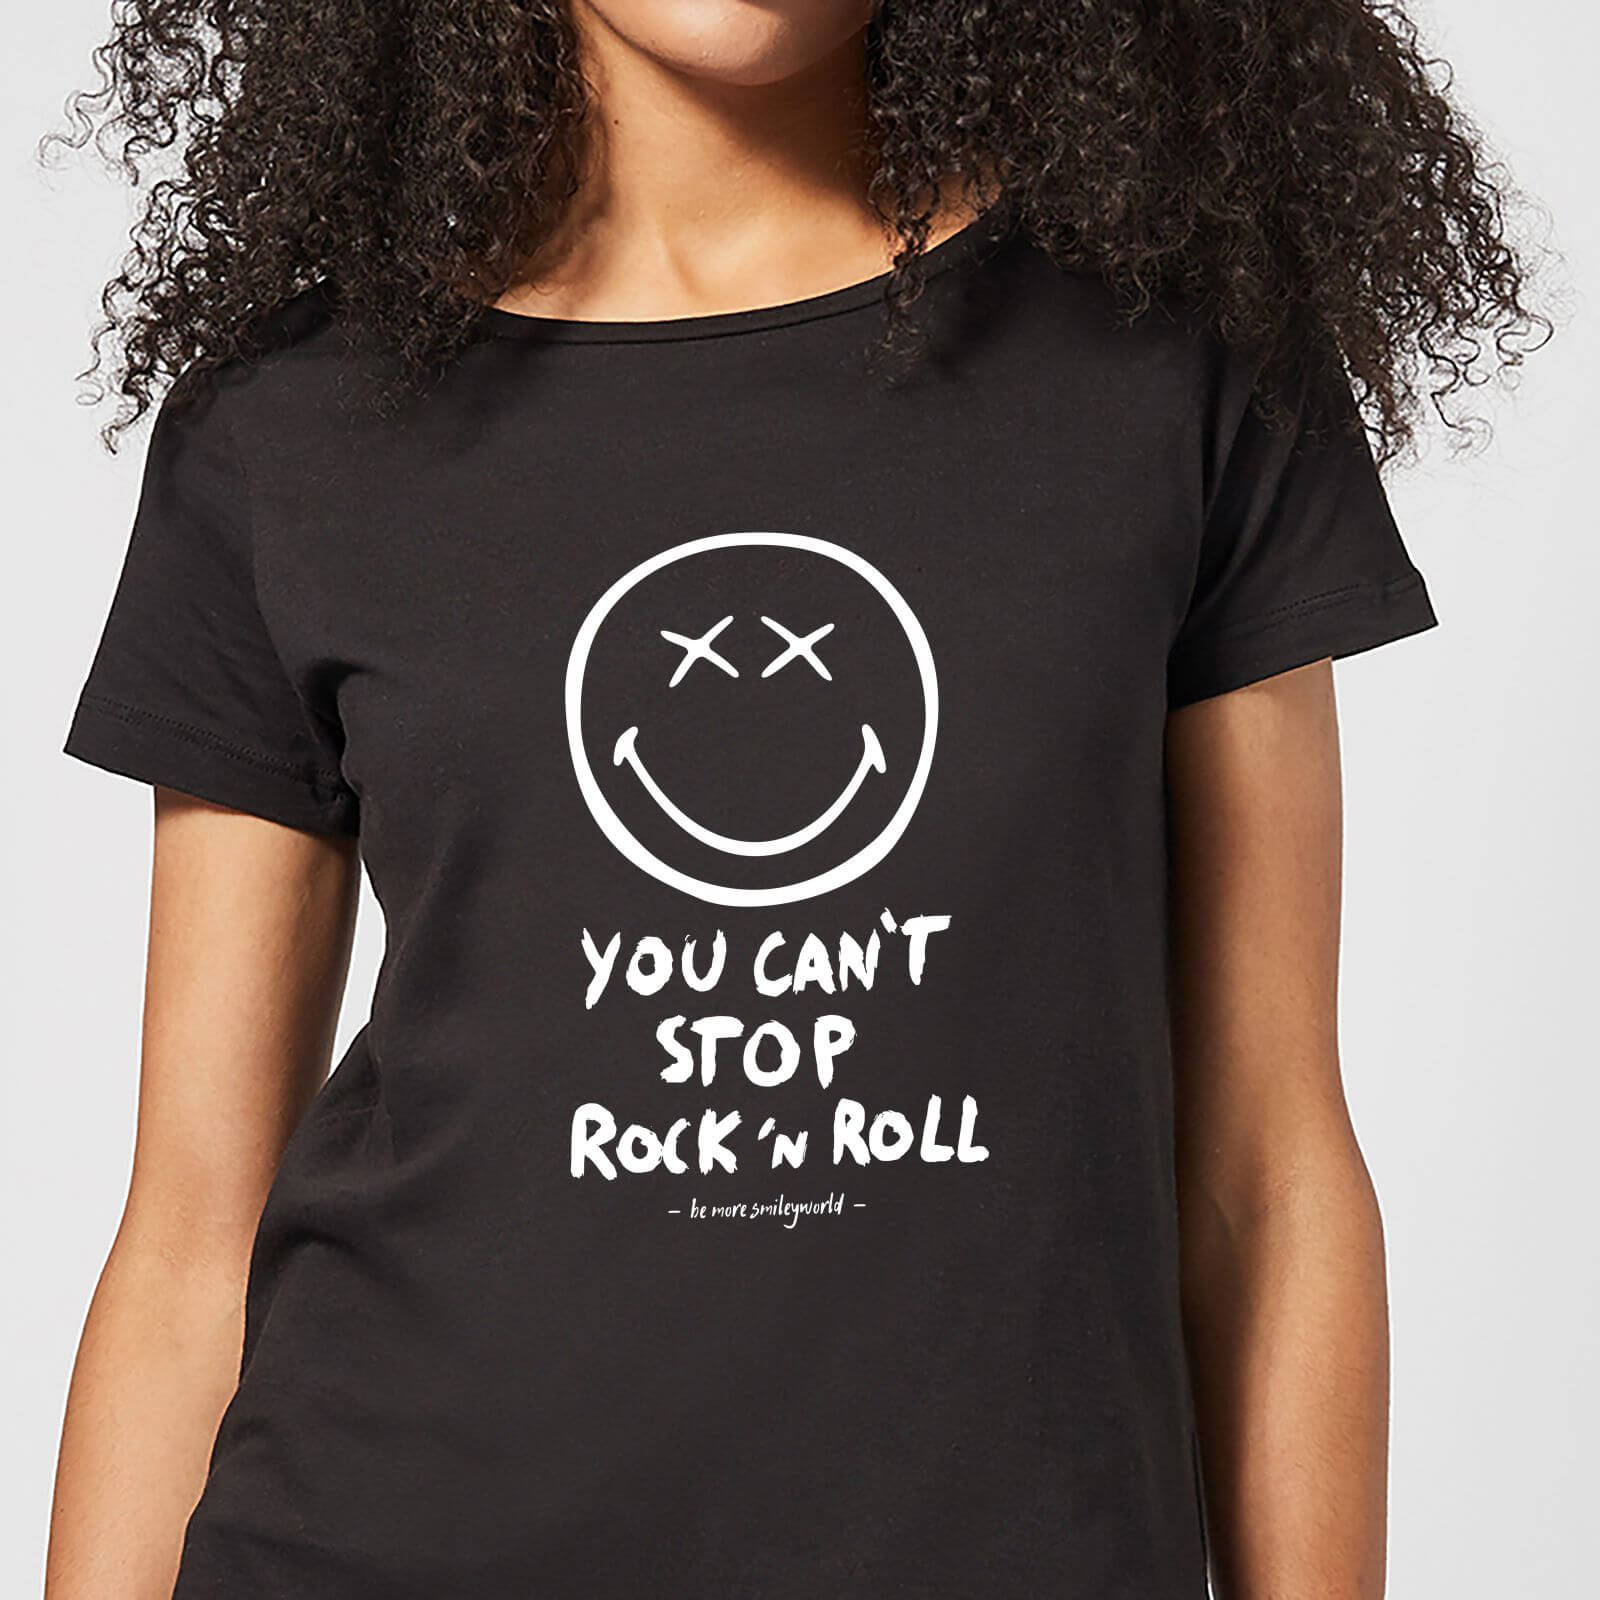 You Can't Stop Rock N Roll Women's T-Shirt - Black - S - Black